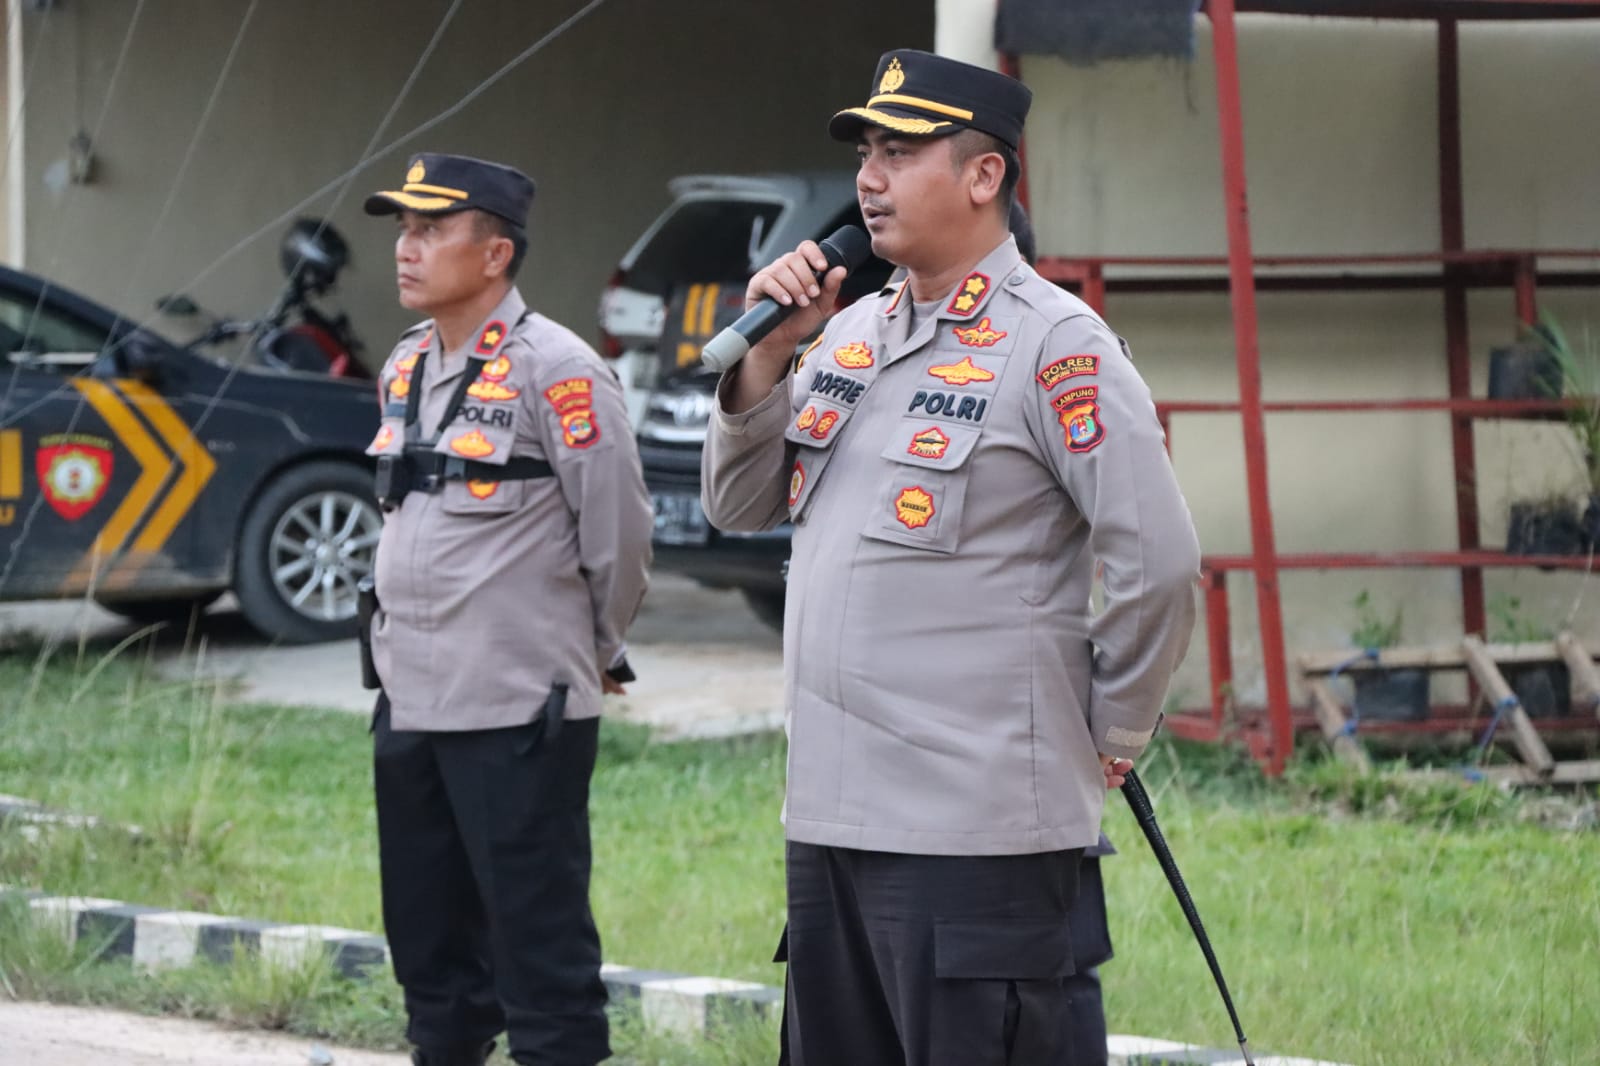 Ratusan Personil Gabungan TNI-Polri, Brimob Dengan Di Backup Polda Lampung Amankan Lokasi Pembakaran Mess PT GAJ Padang Ratu